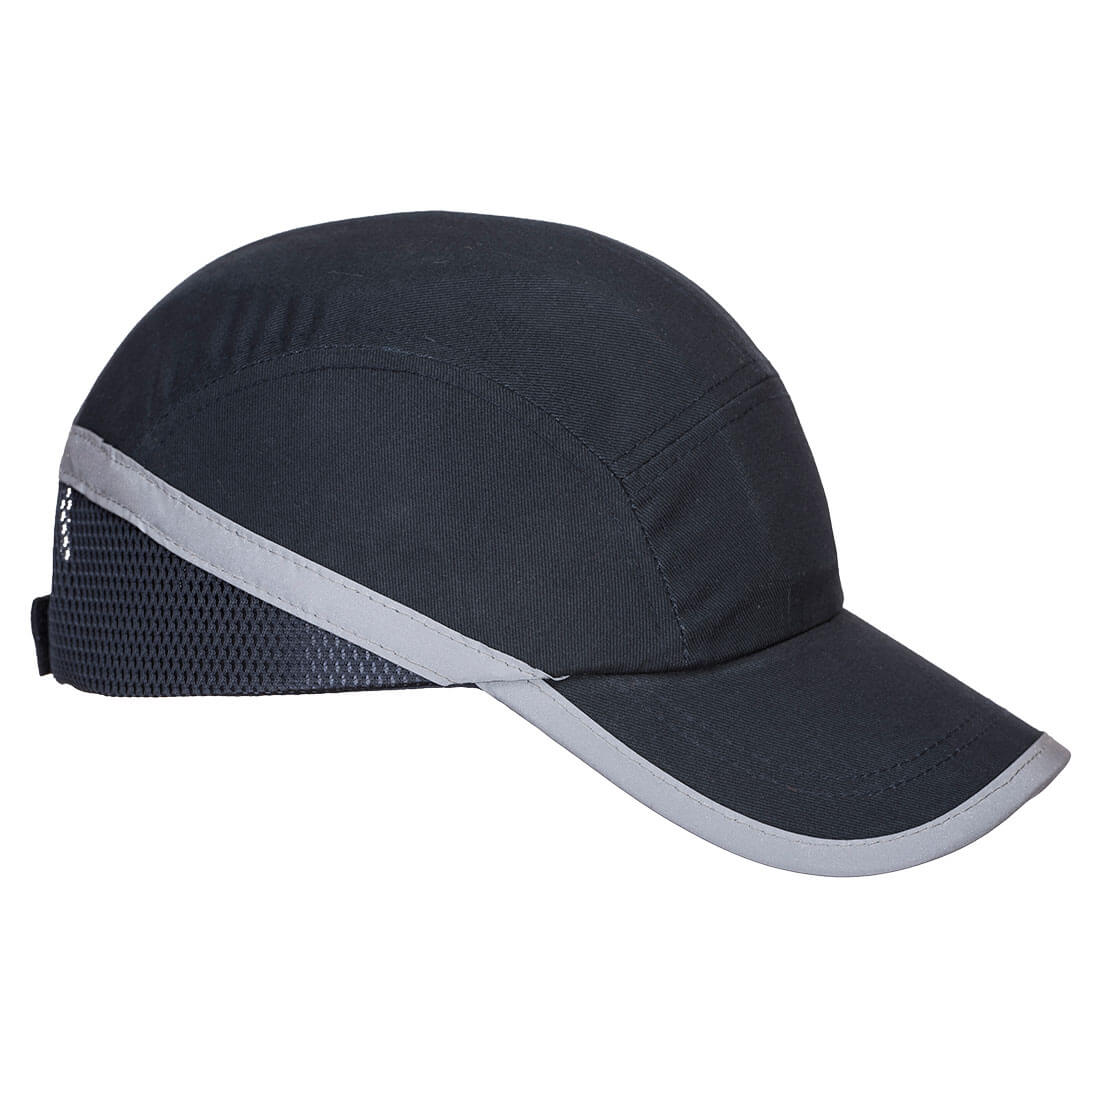 Portwest Hi Vis Work Safety Bump Cap Head Protection Hard Hat Baseball Cap PW79 